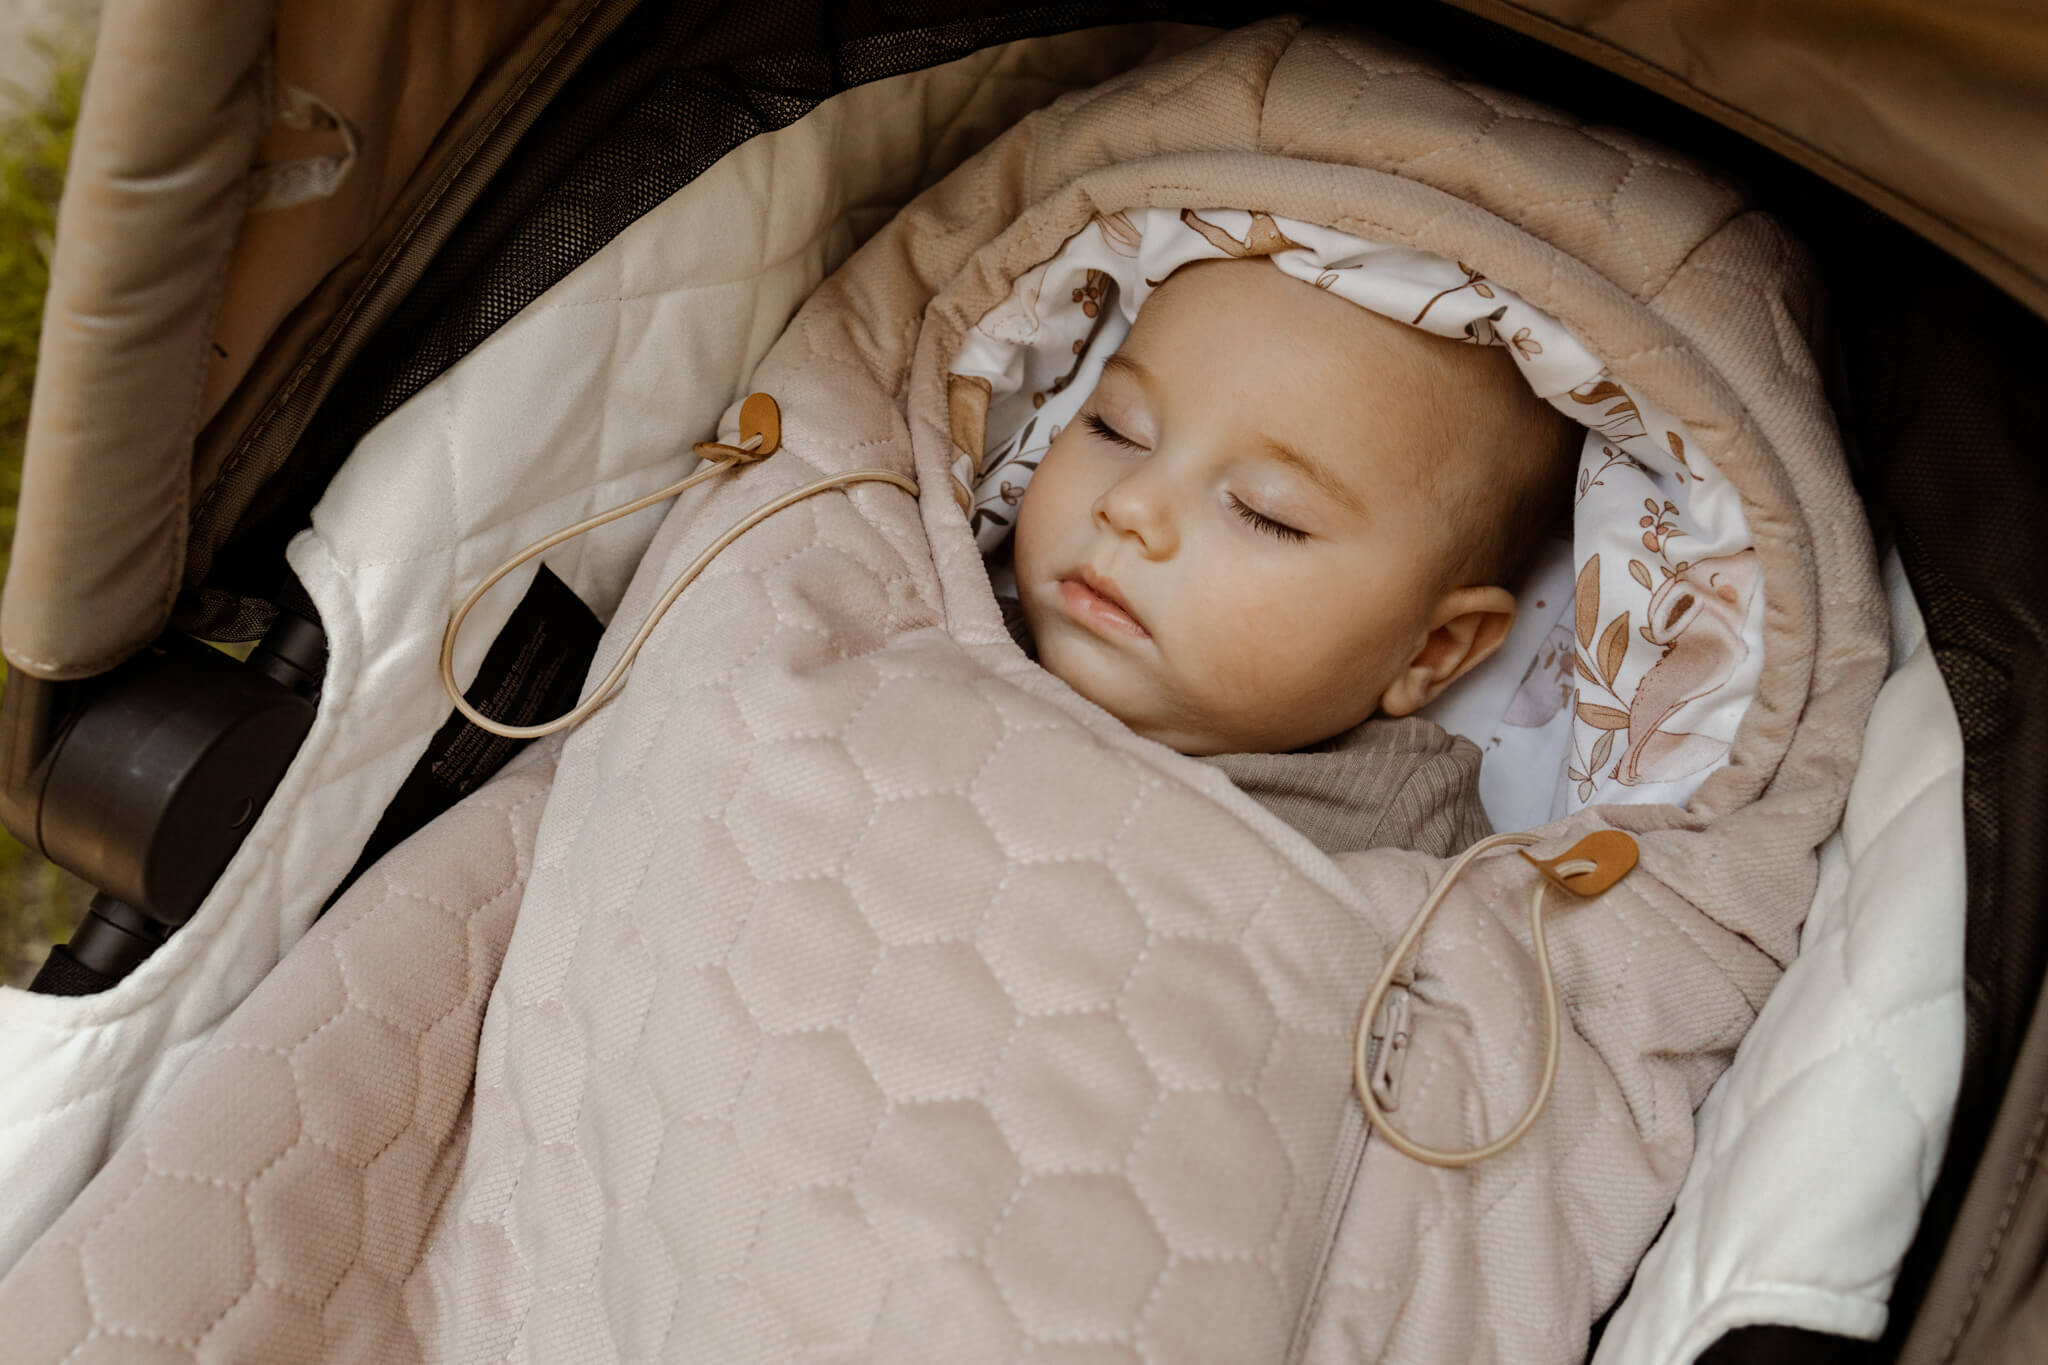 What's cuter than a baby in a pram sleeping bag? A baby in a pram